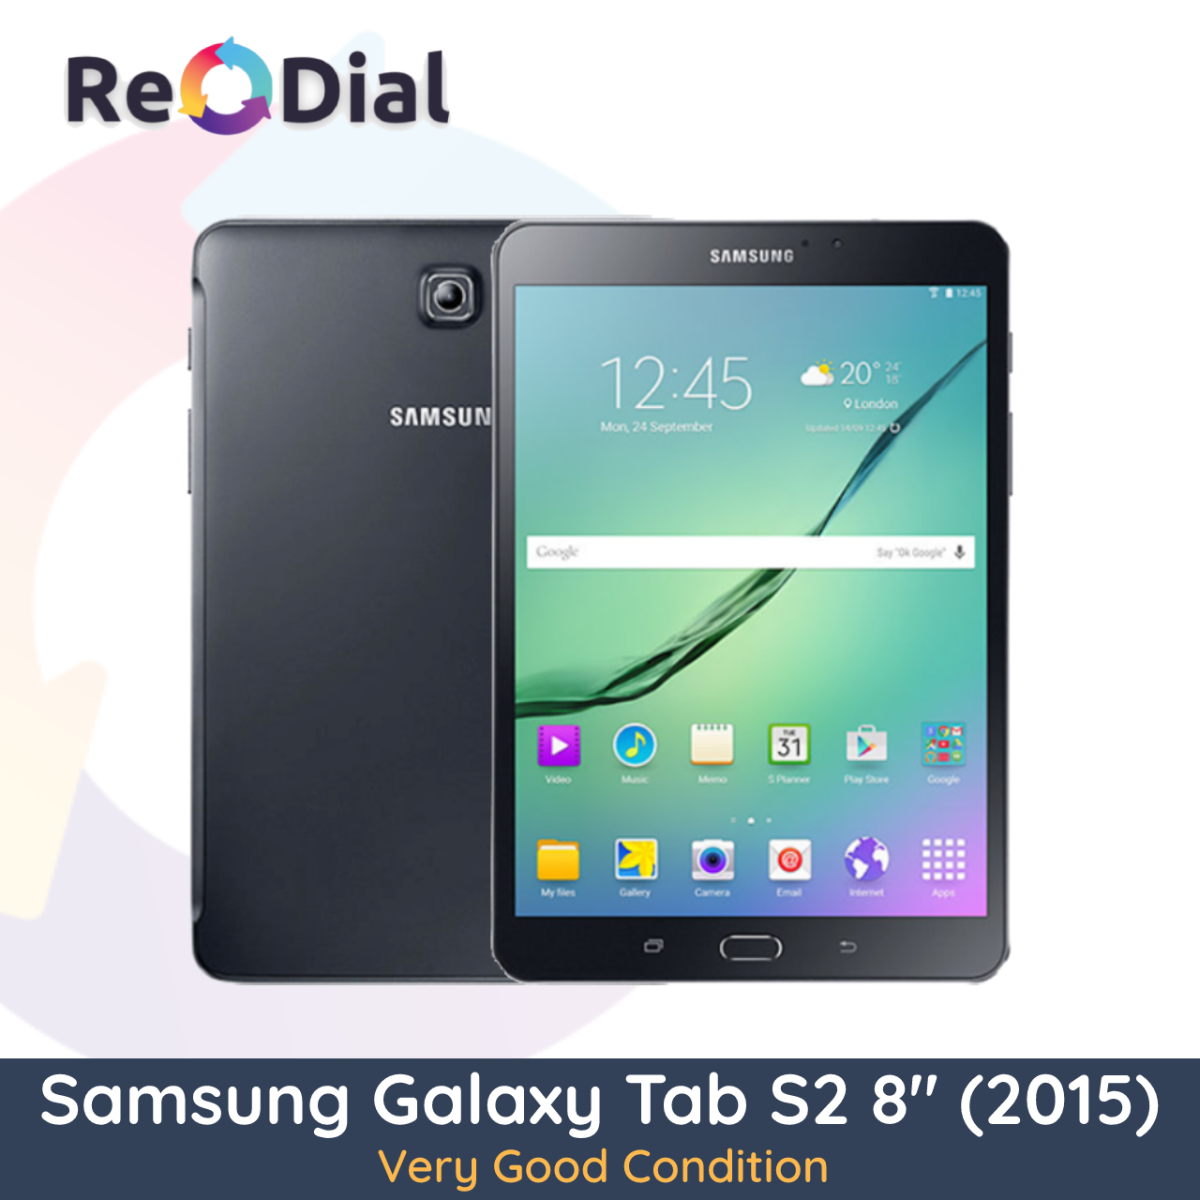 Samsung Galaxy Tab S2 8.0" (T719Y / 2015) WiFi + Cellular - Very Good Condition